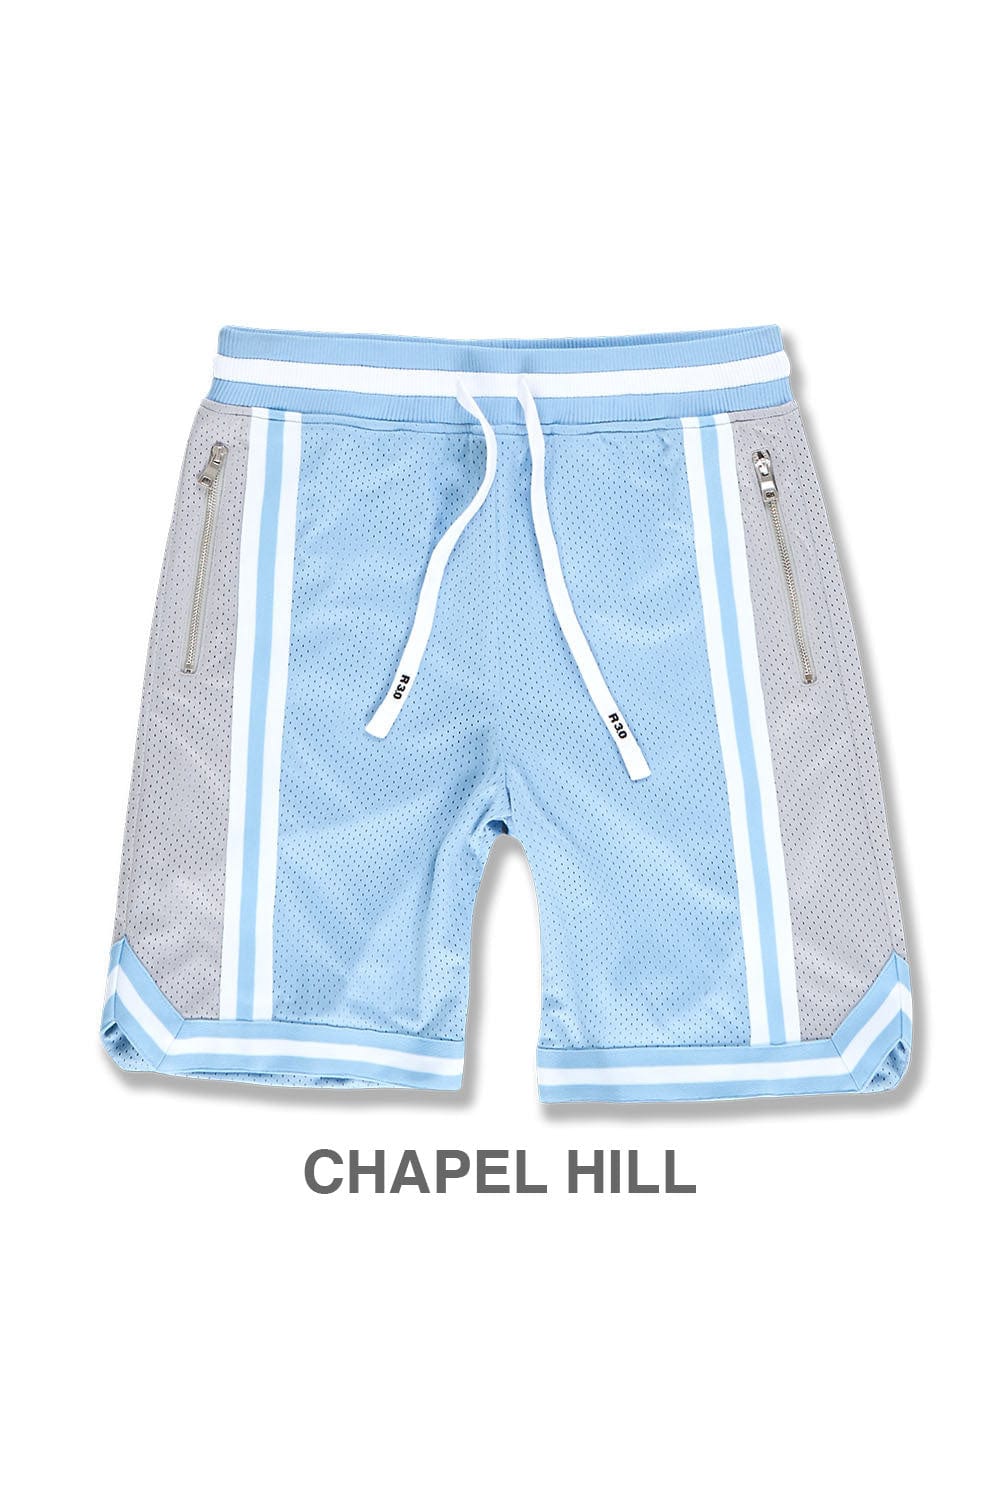 Jordan Craig OG - Slasher Basketball Shorts (Memorial Day Markdown) S / Chapel Hill